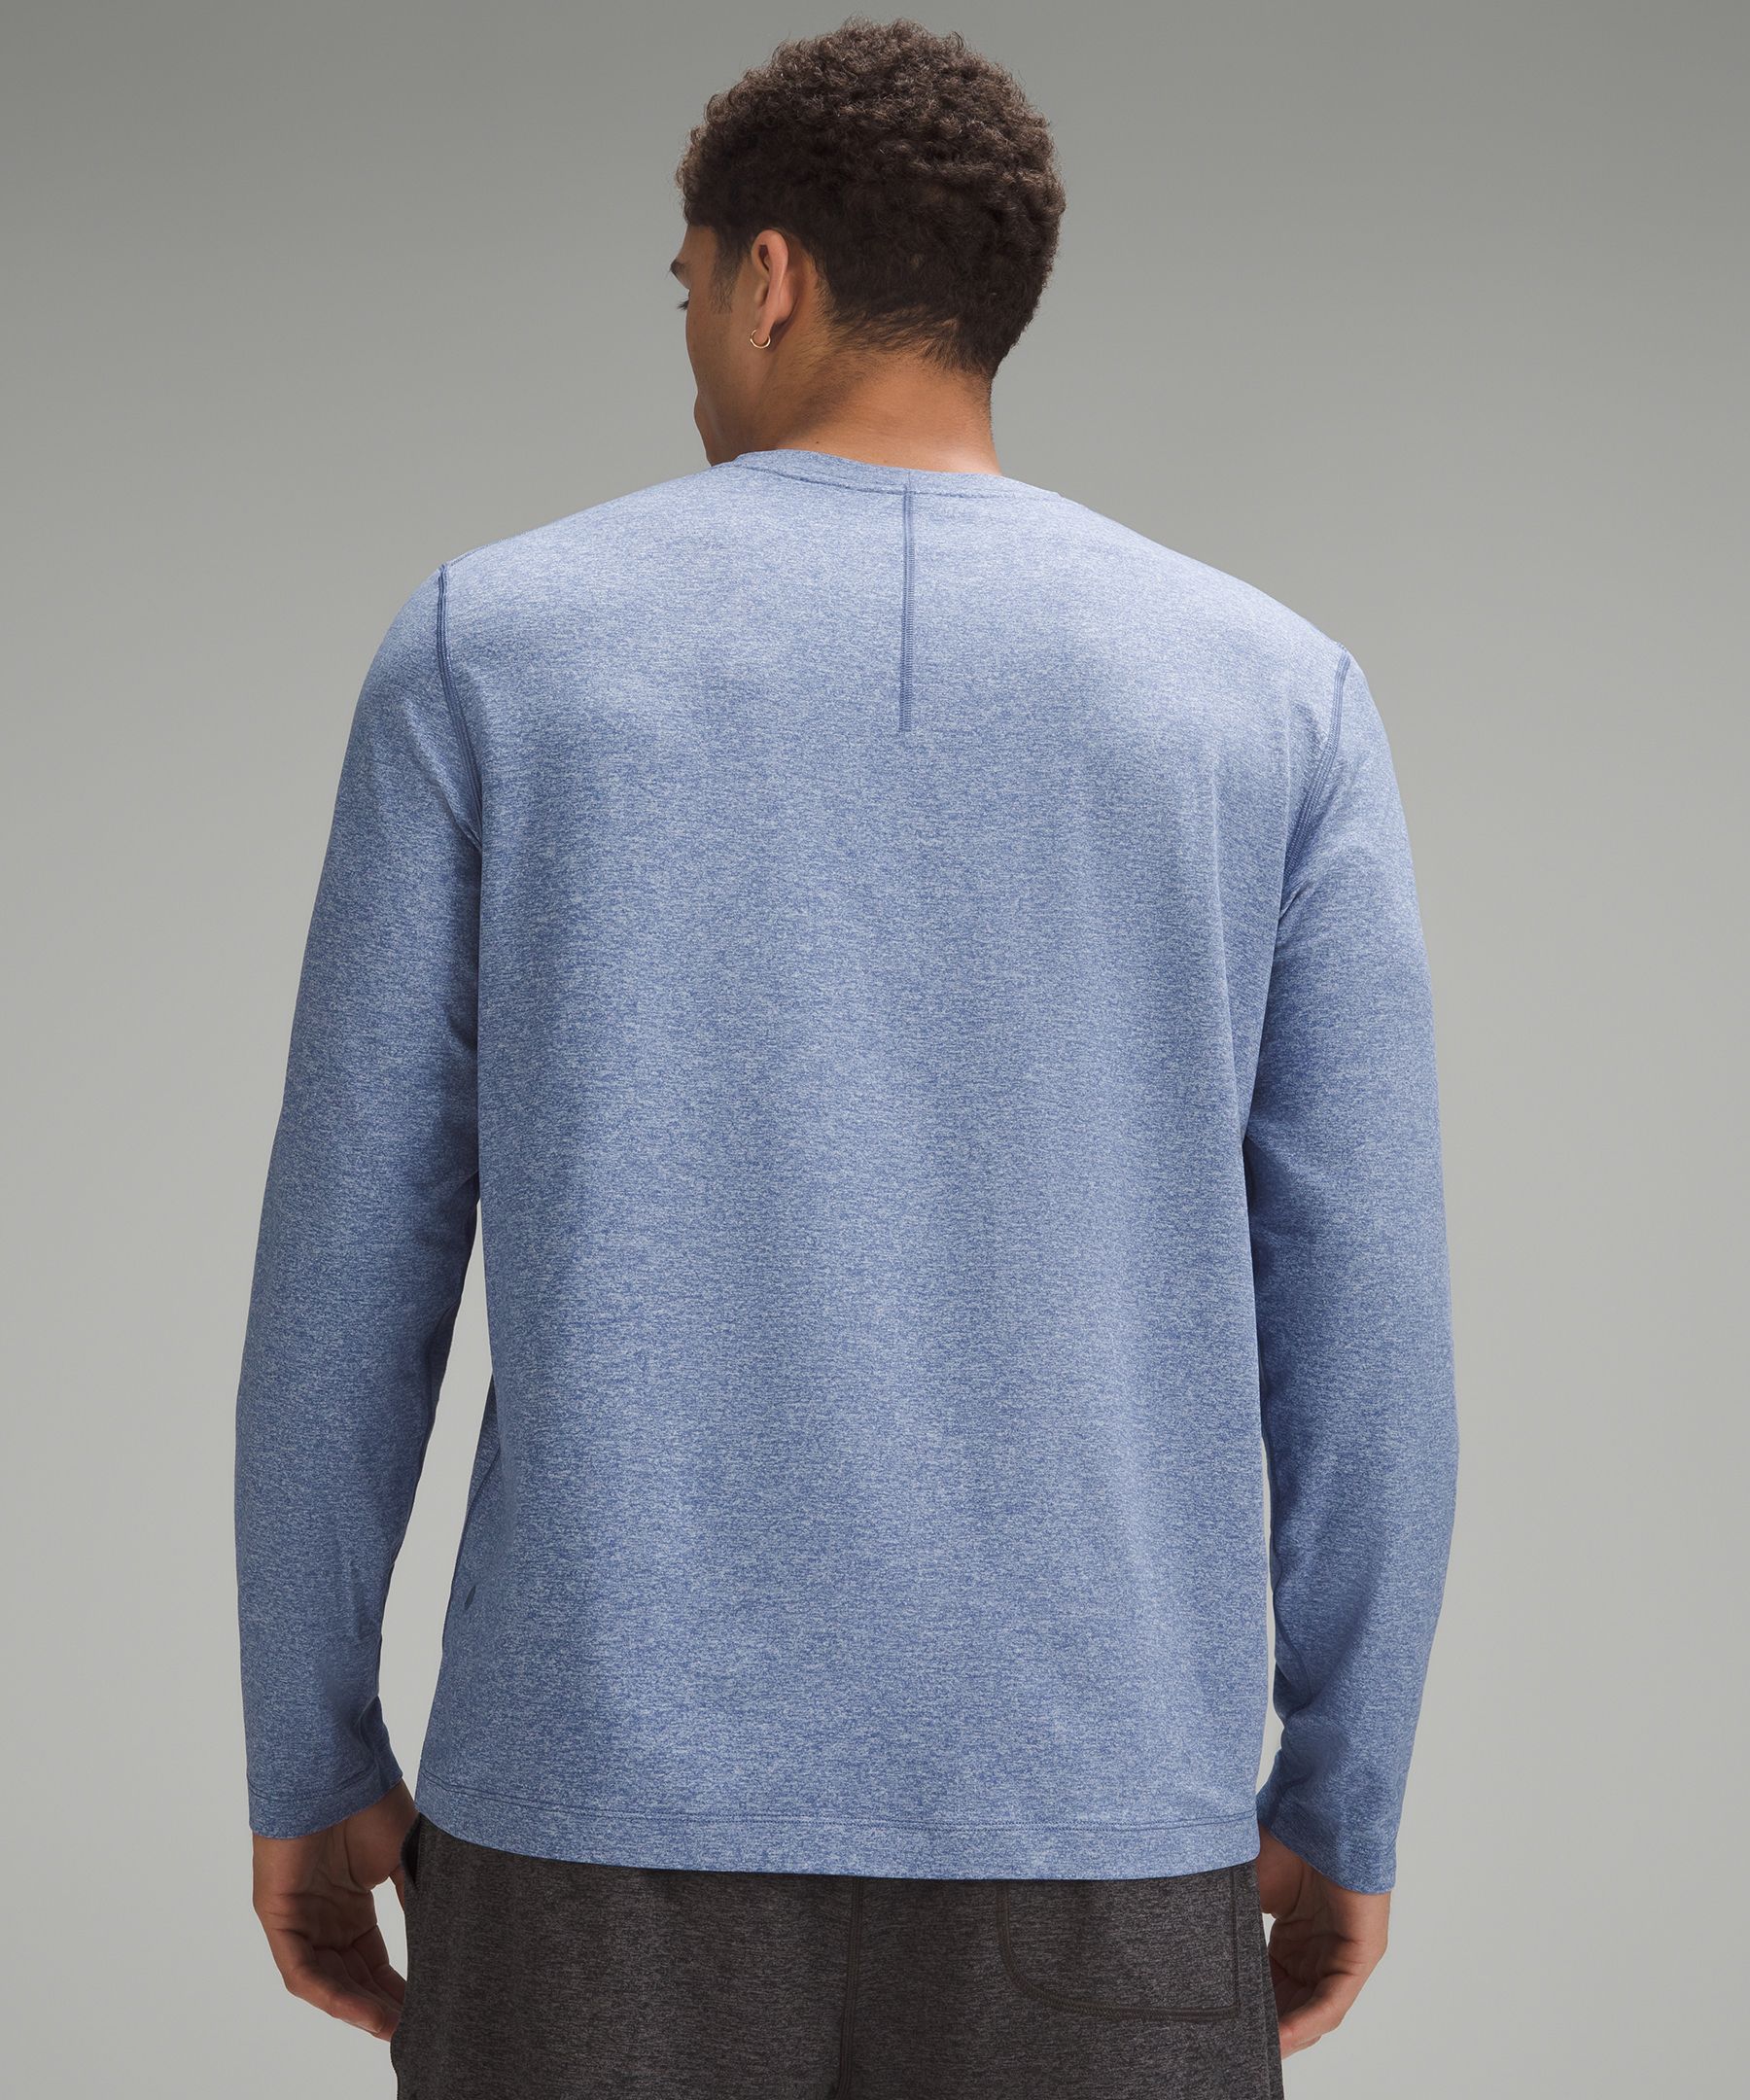 Soft Jersey Half Zip, Men's Long Sleeve Shirts, lululemon